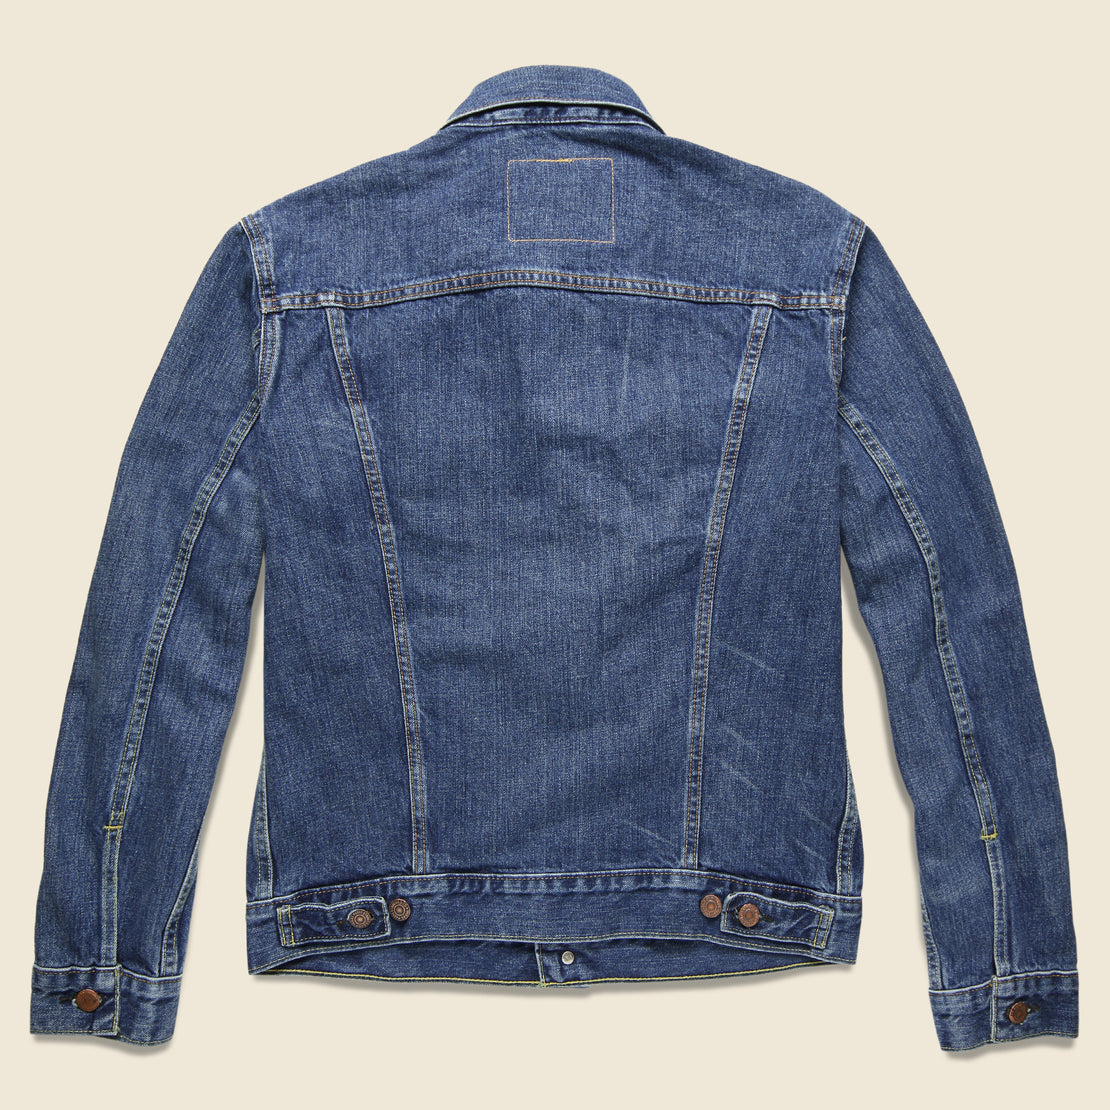 Trucker Jacket - The Shelf - Levis Premium - STAG Provisions - Outerwear - Coat / Jacket